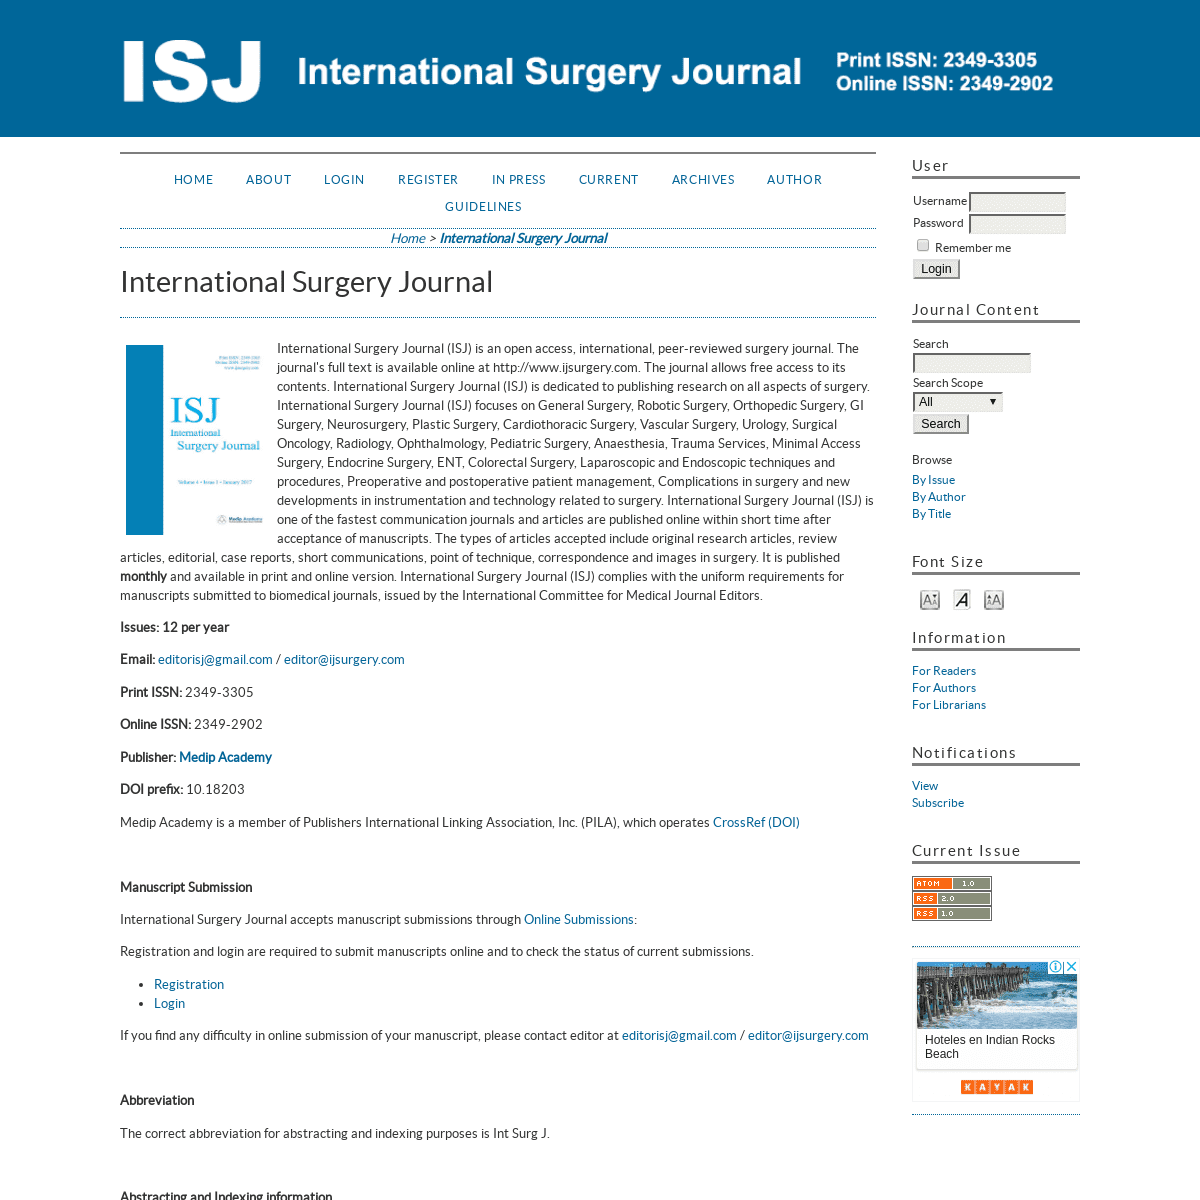 A complete backup of ijsurgery.com